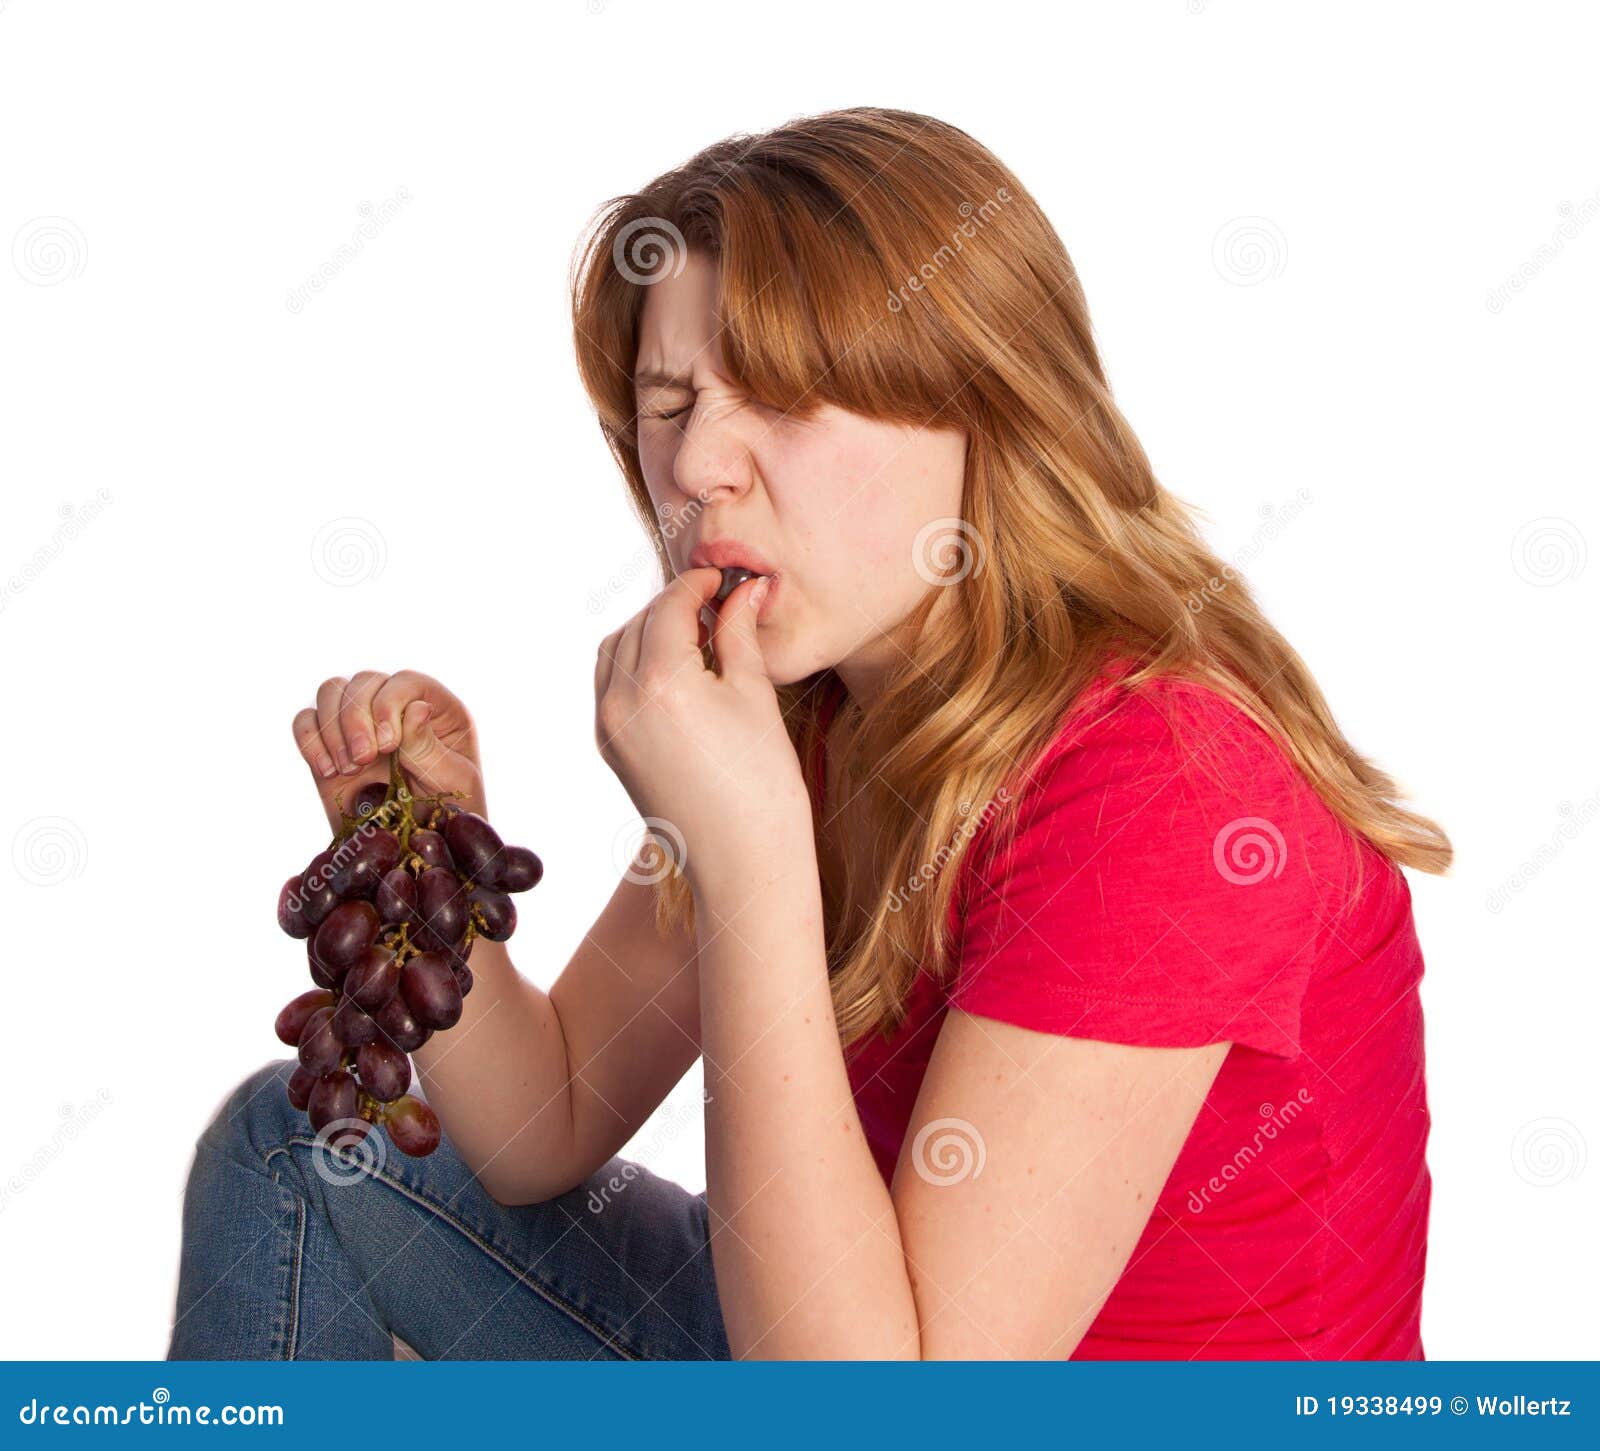 sour-grapes-19338499.jpg